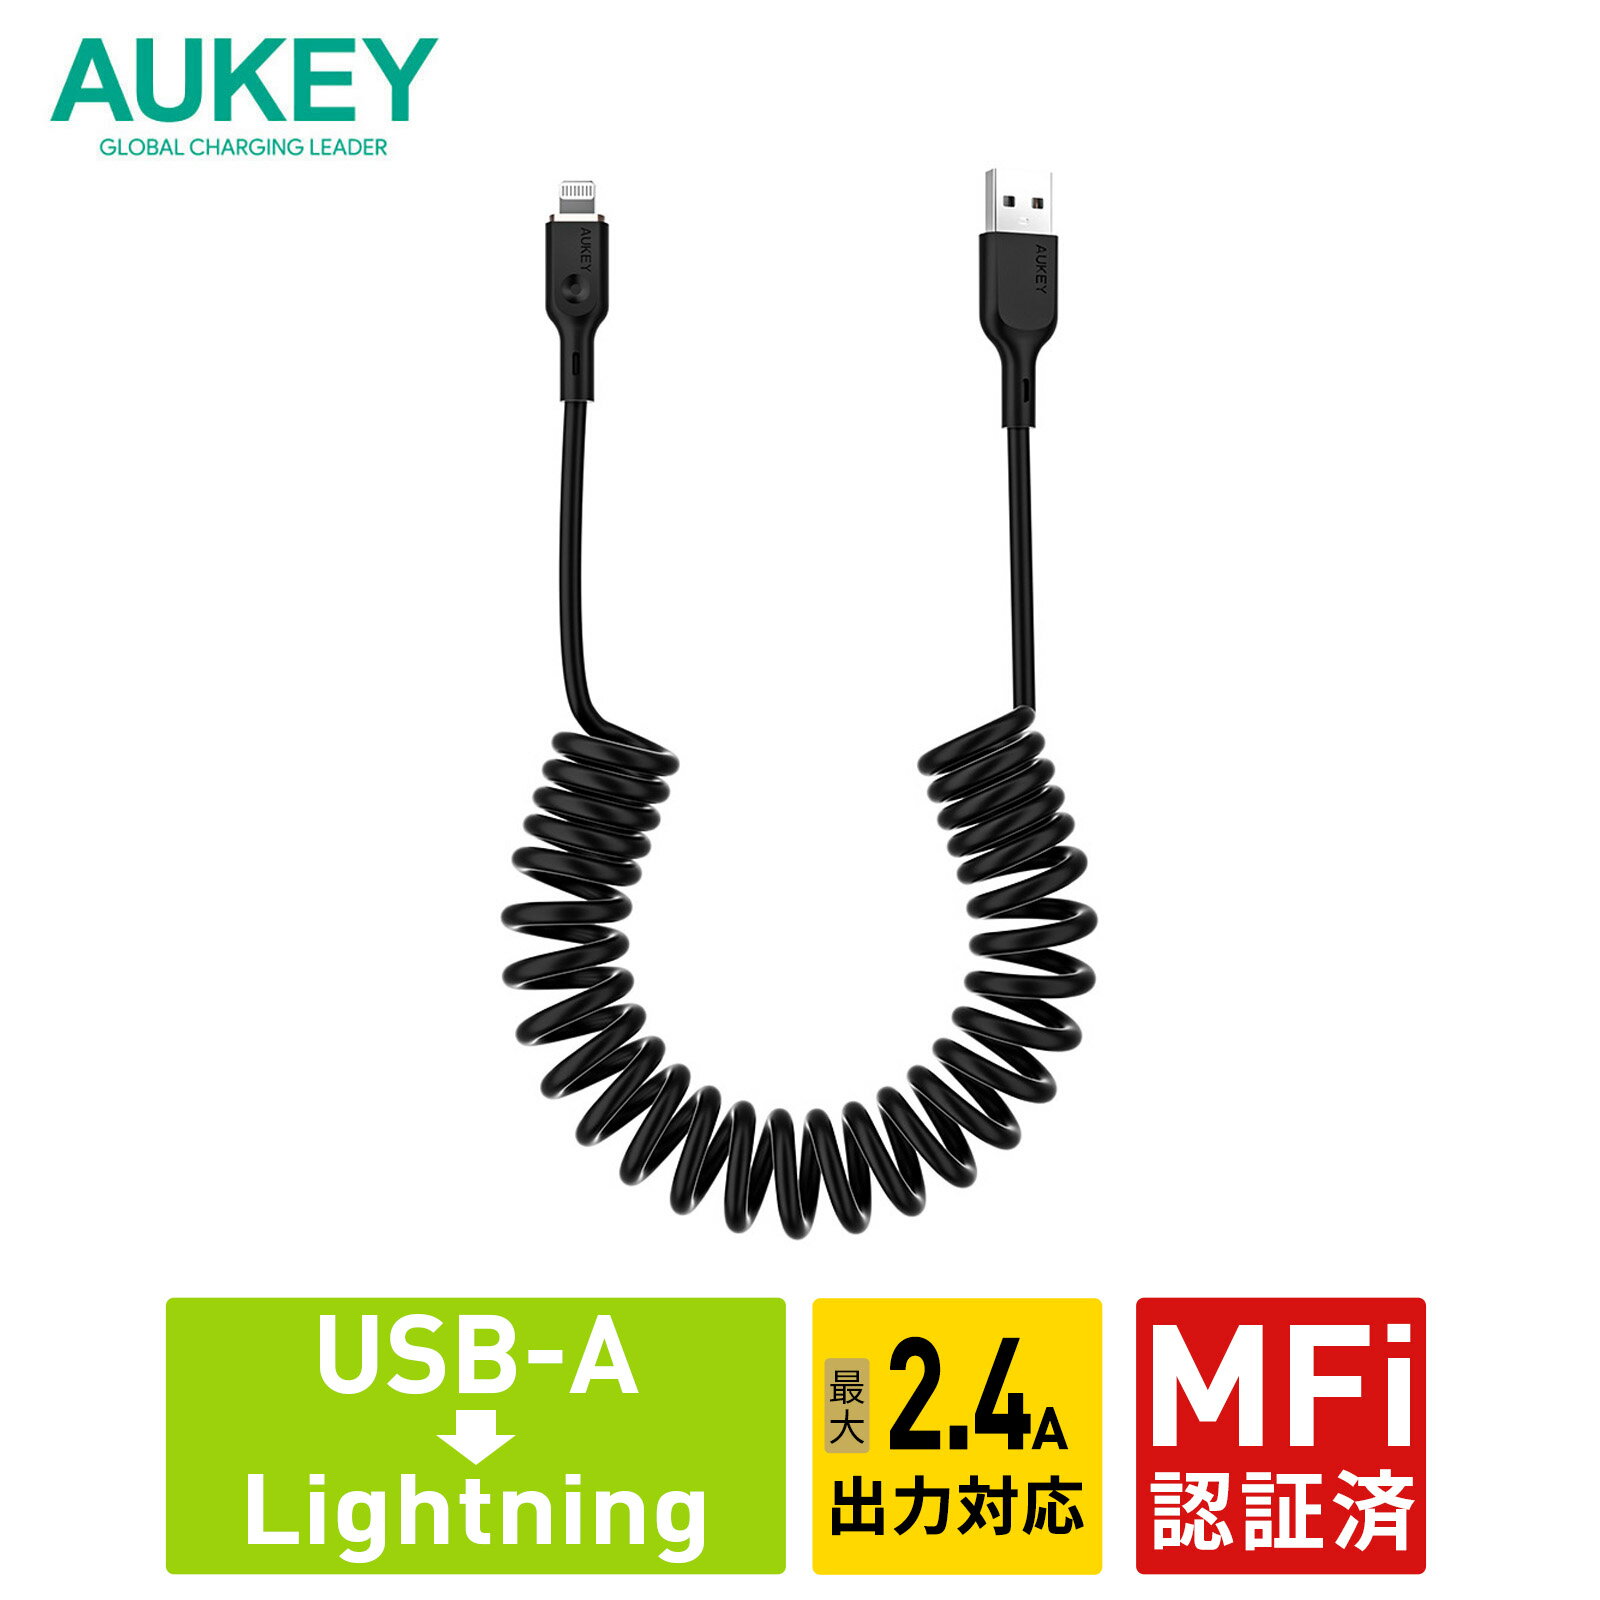 AUKEY USB Type-A to Lightning ケーブル A-L 1.5m Coiled Series CB-AKL9 急速充電 コイル型 データ転送 480Mbps MFi認証 ライトニングケーブル ブラック 2年保証 オーキー